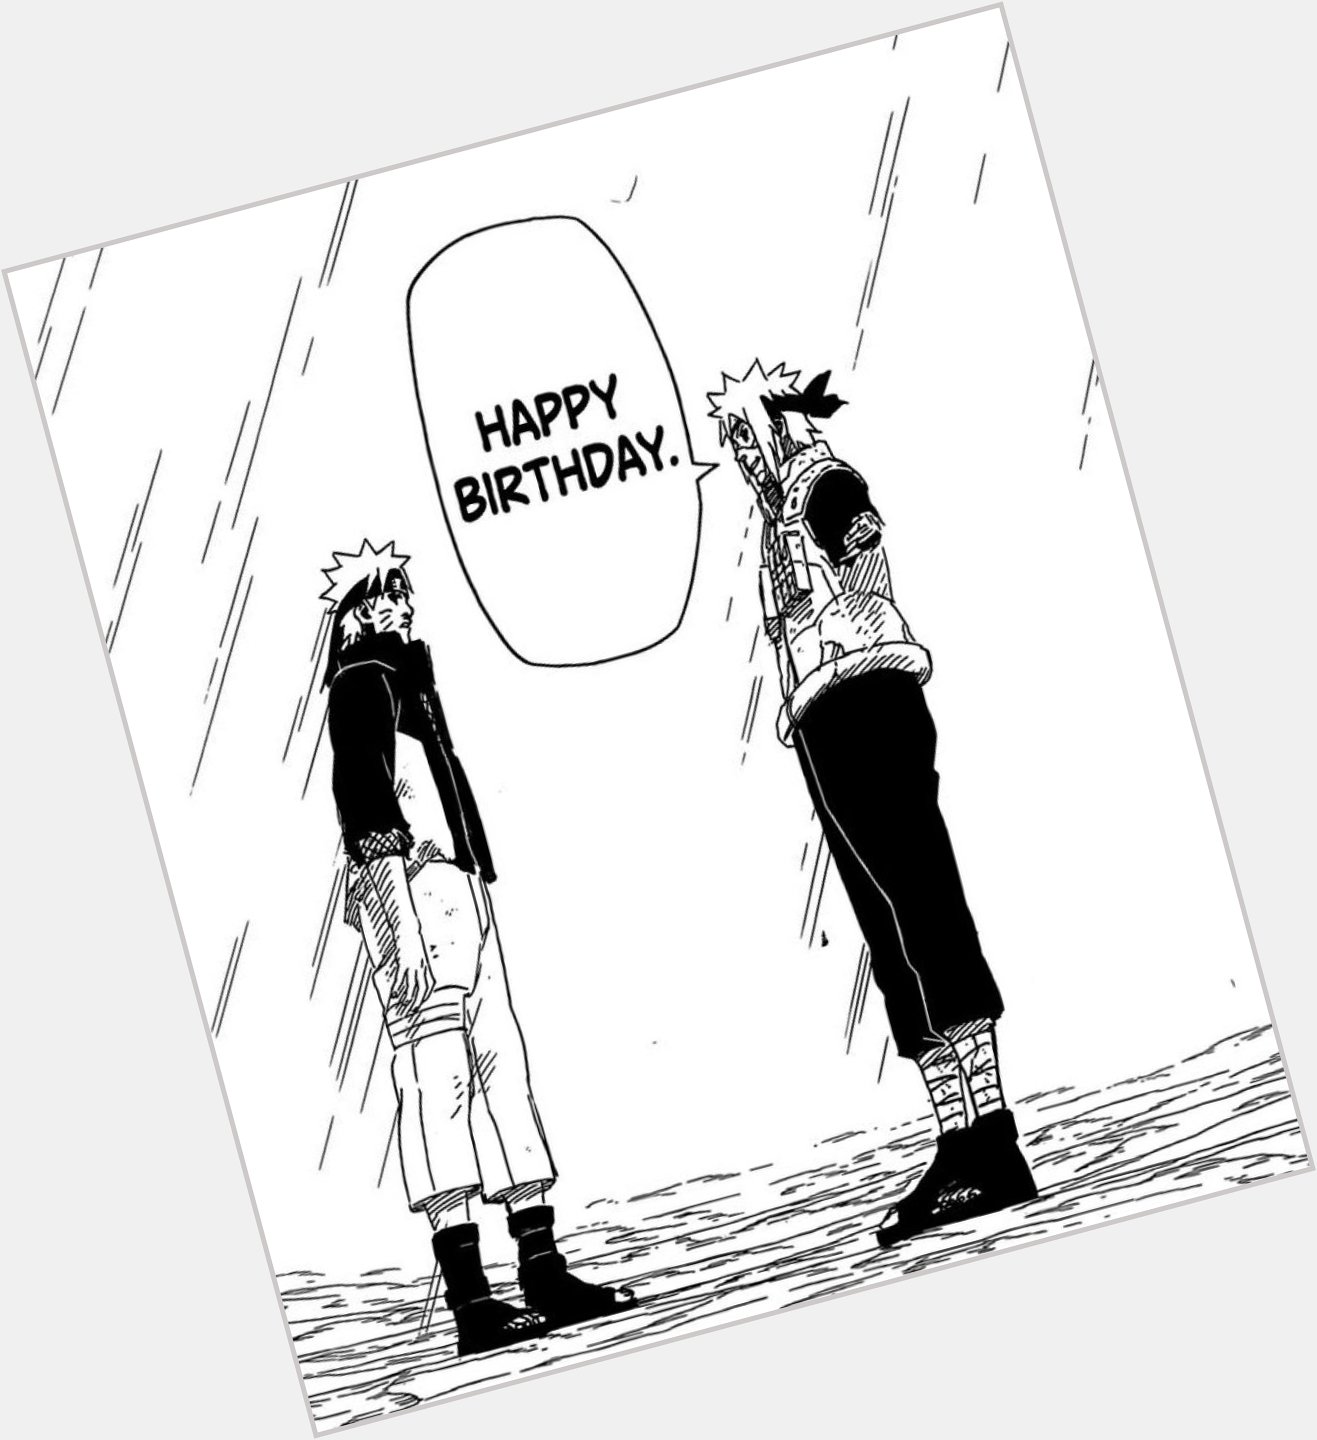 Today is the birthday of 2 goats. Naruto and Rumiko Takahashi, Happy Birthday! 